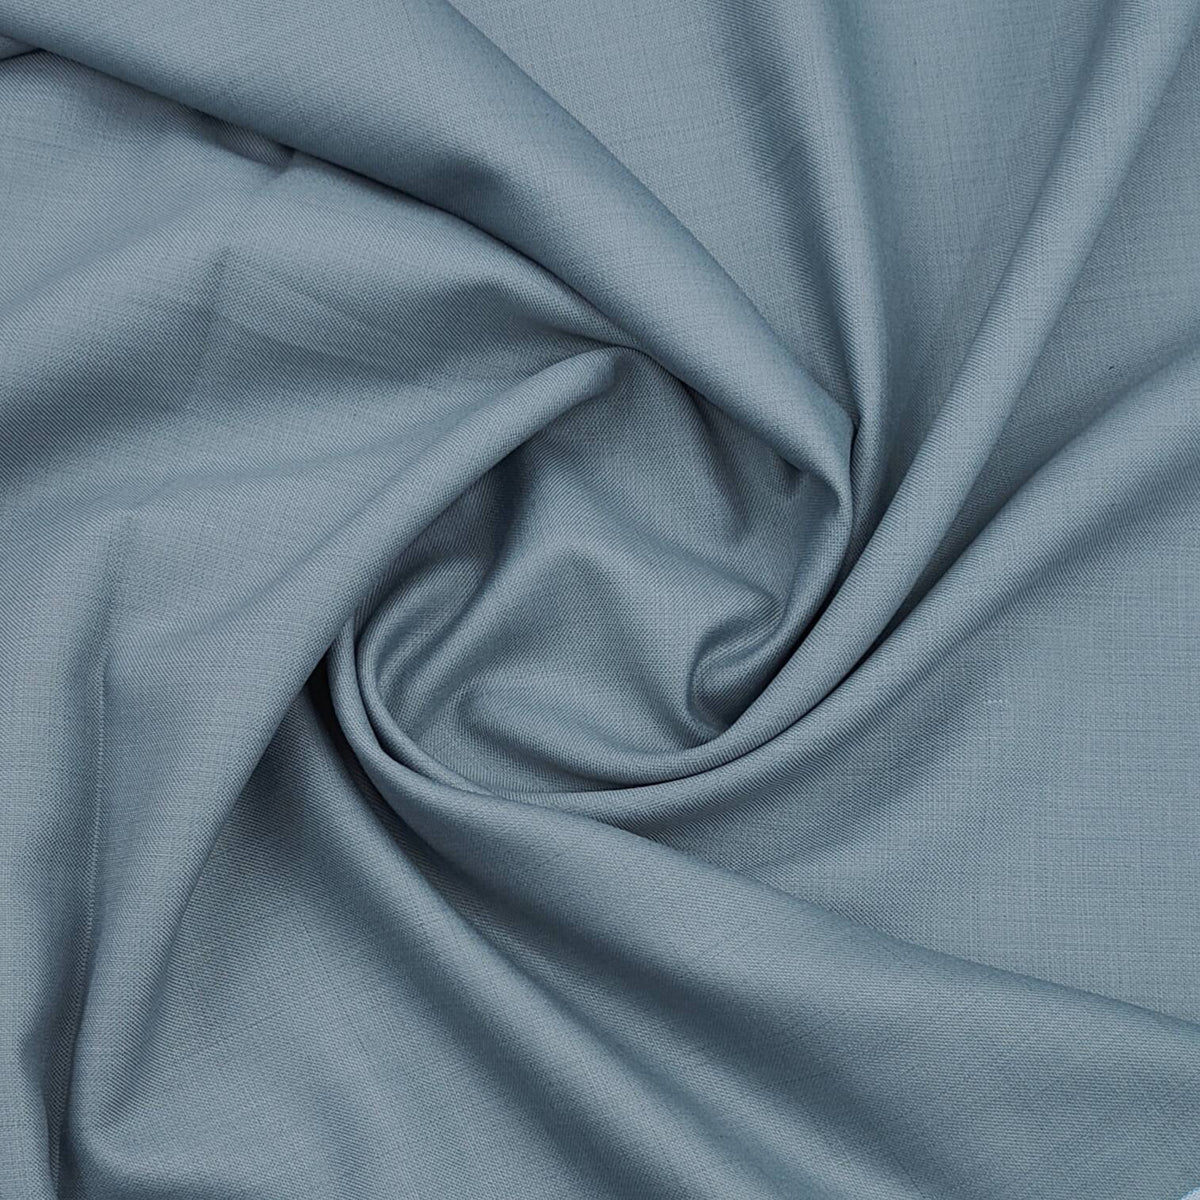 Siyaram Men's Premium self textured unstitched Trouser Fabric (Cloudy Blue)